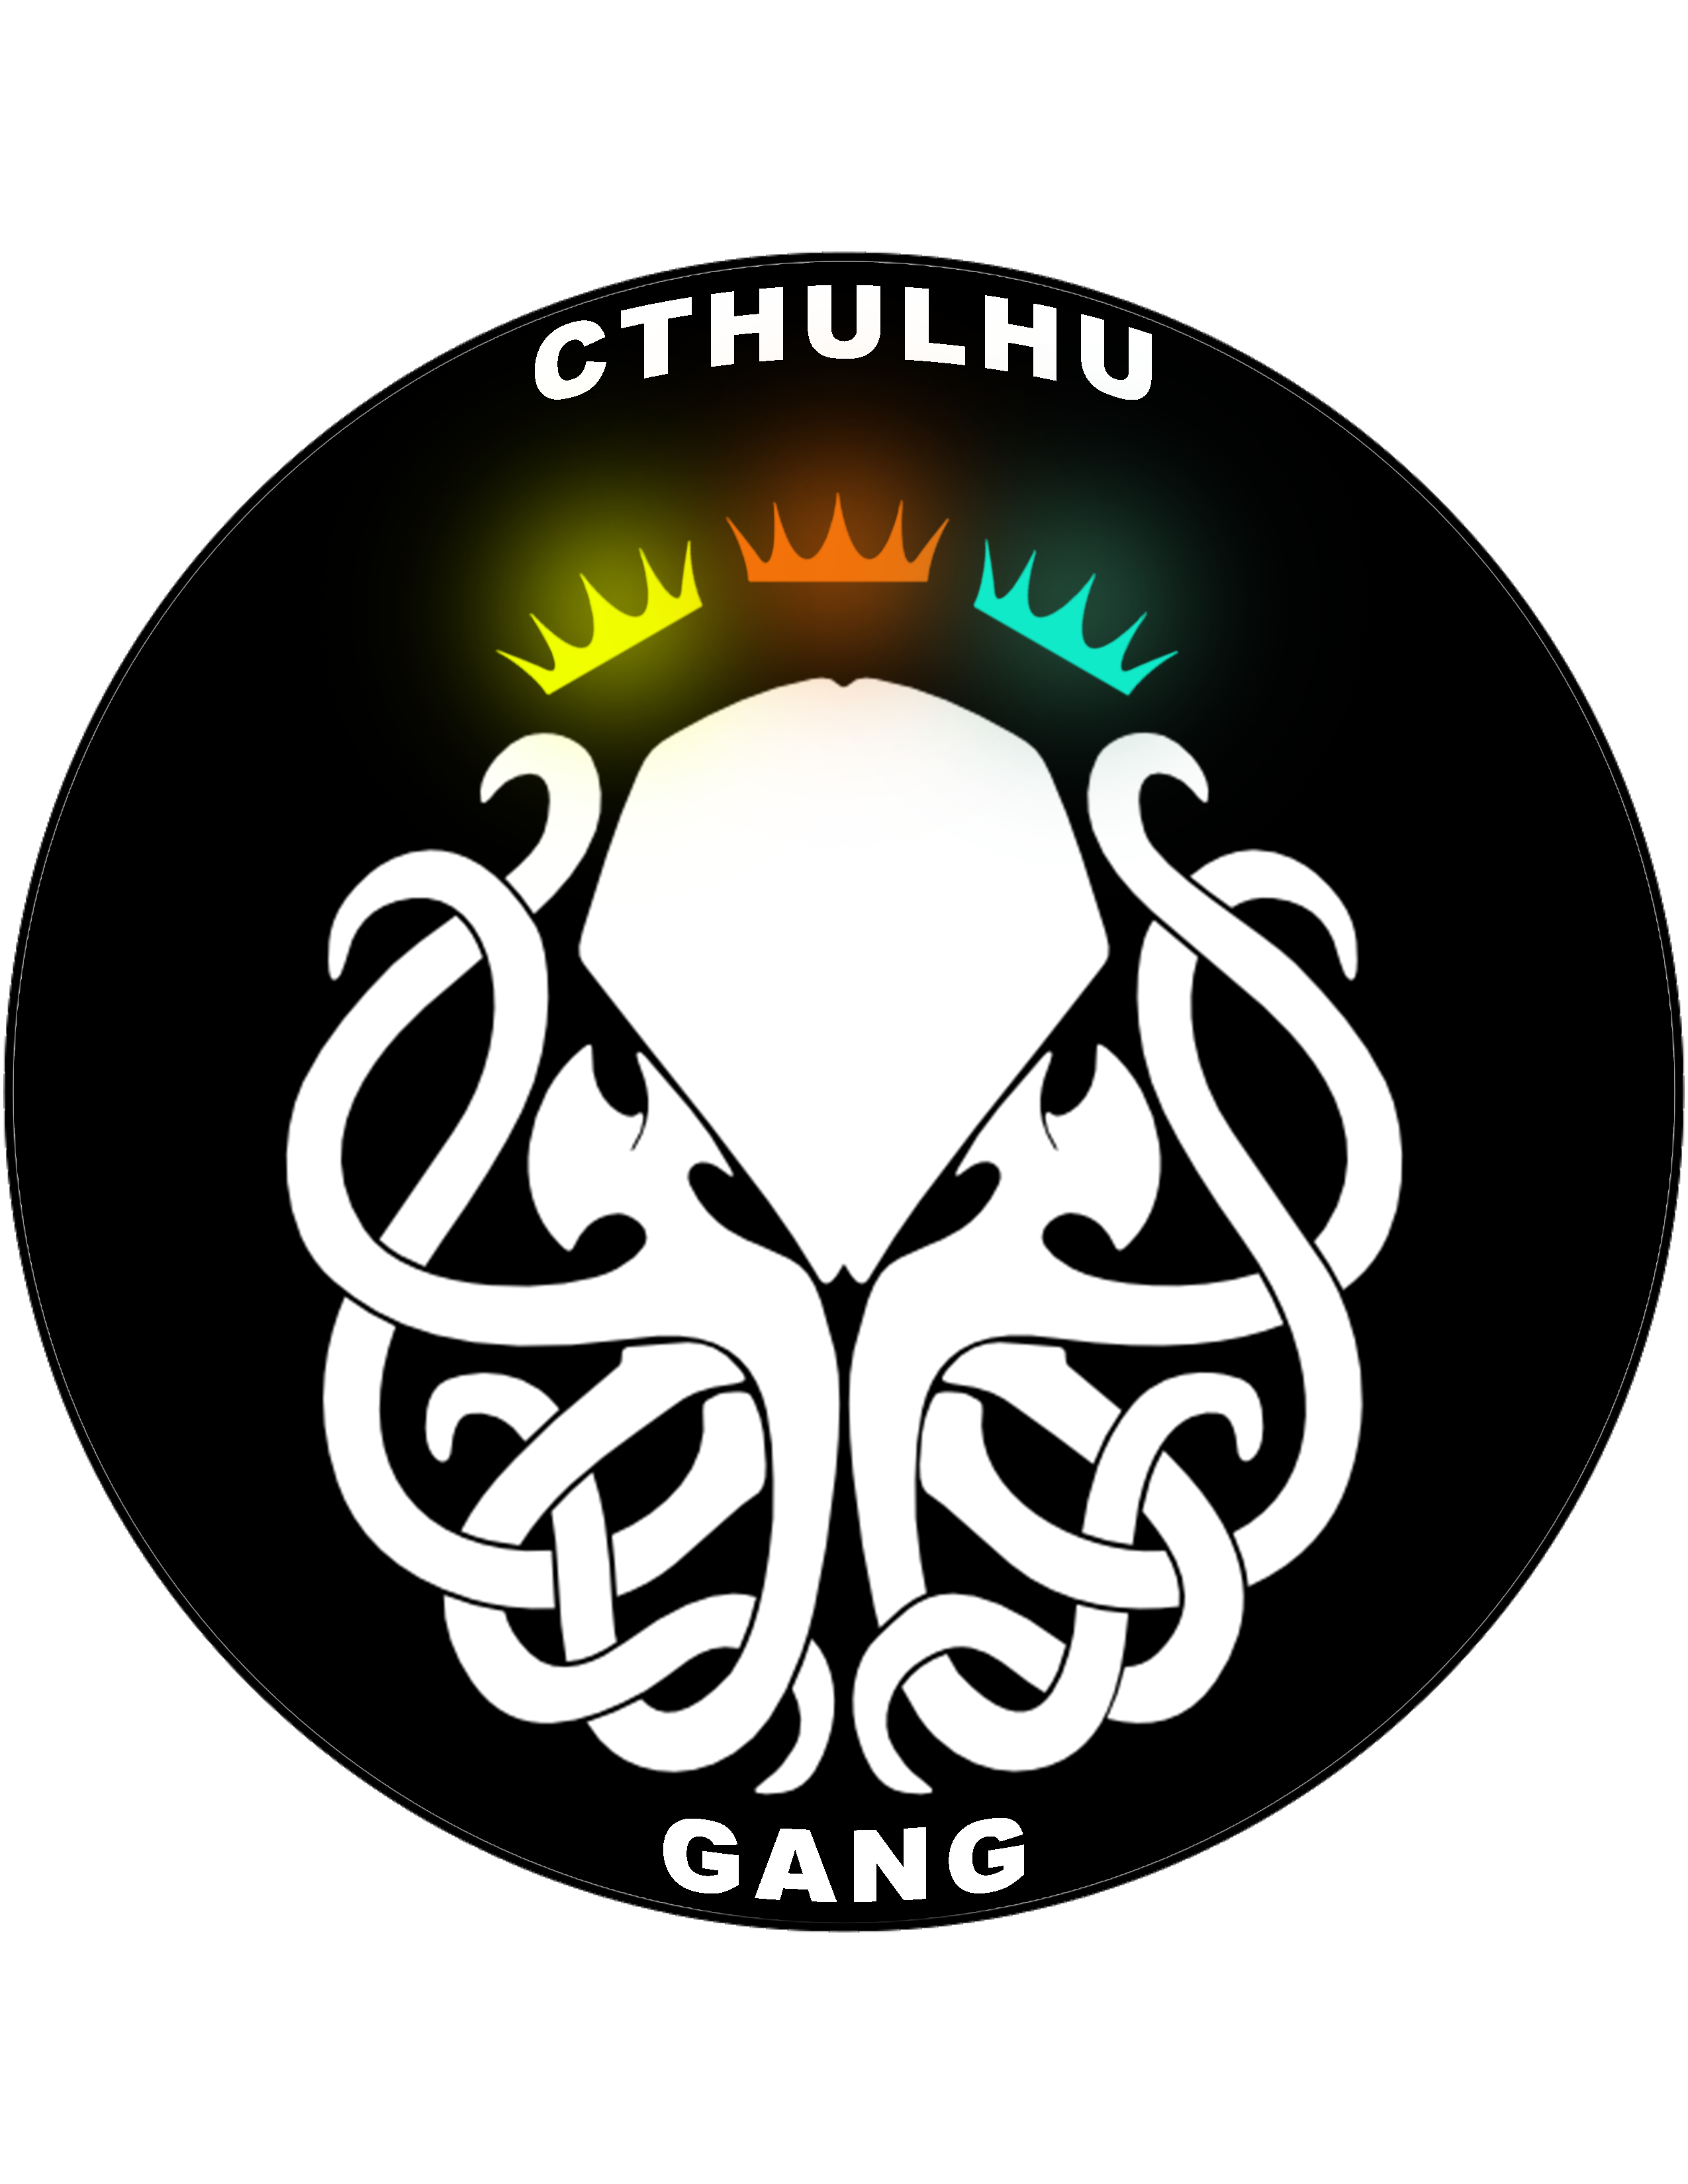 Cthulhu Gang Vrchat Legends Wiki Fandom